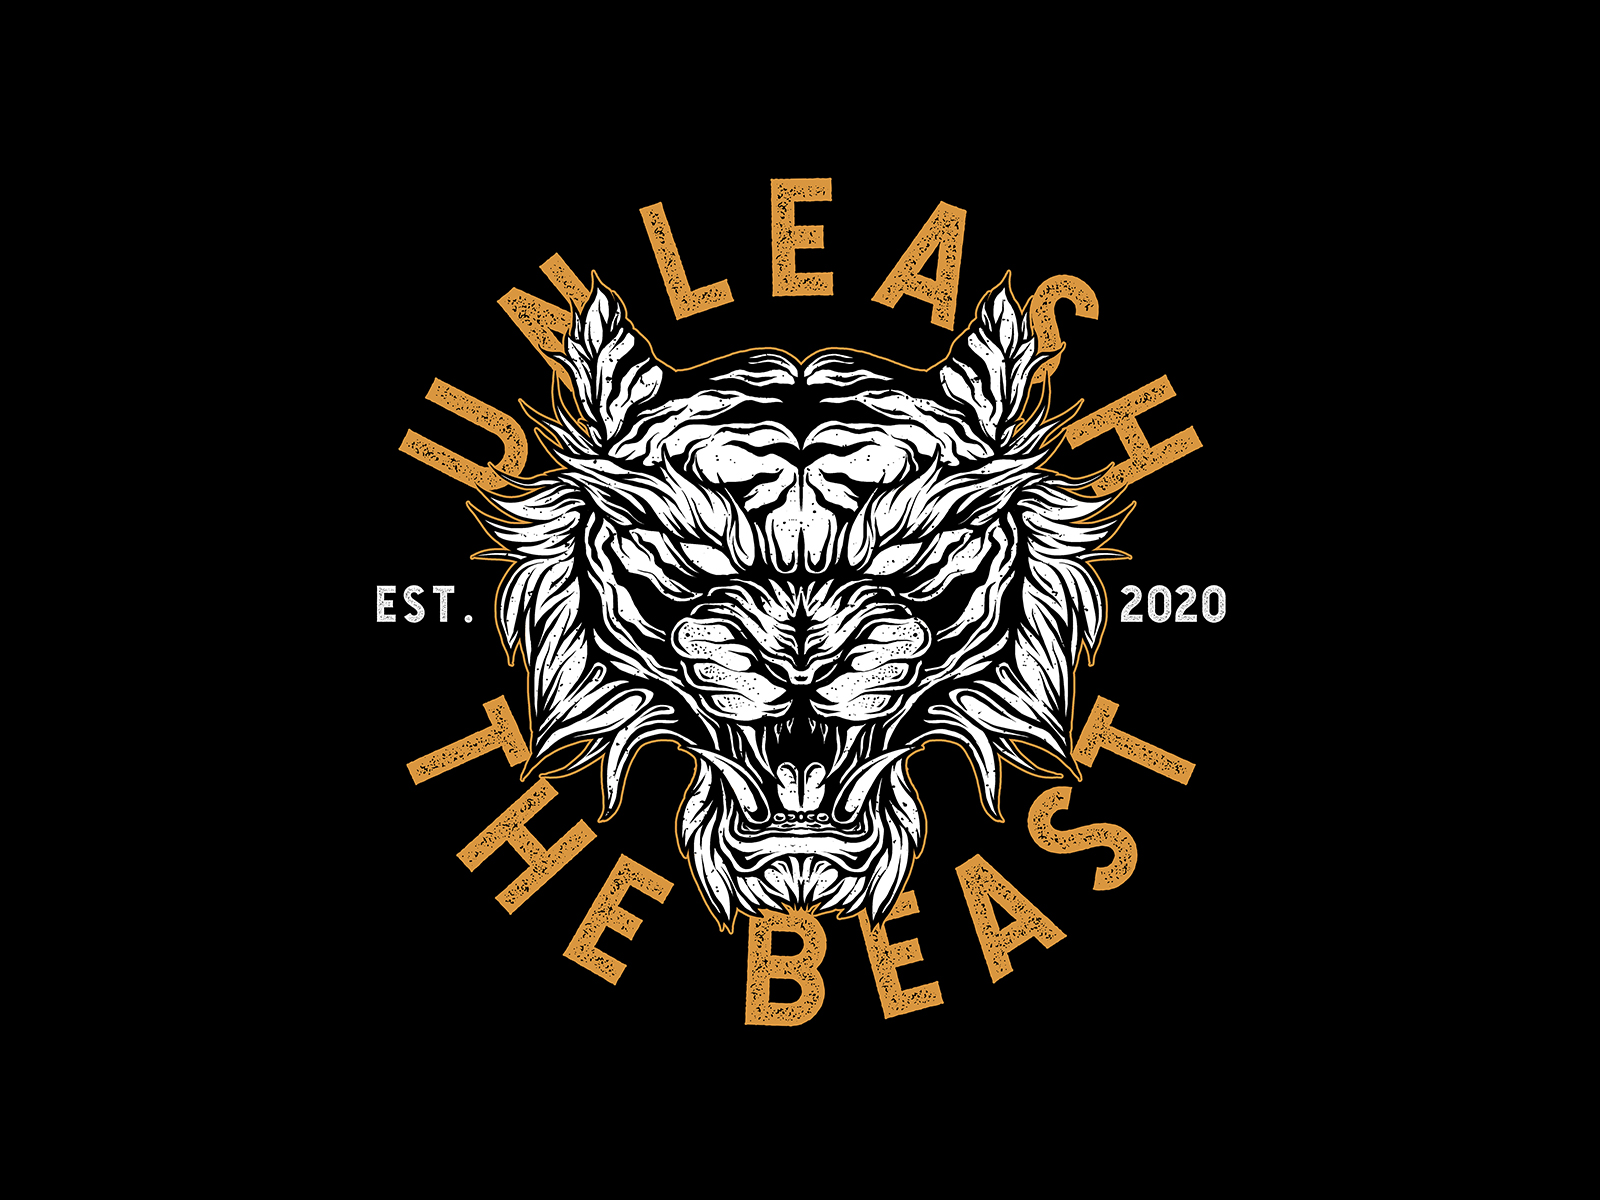 unleash the beast tiger